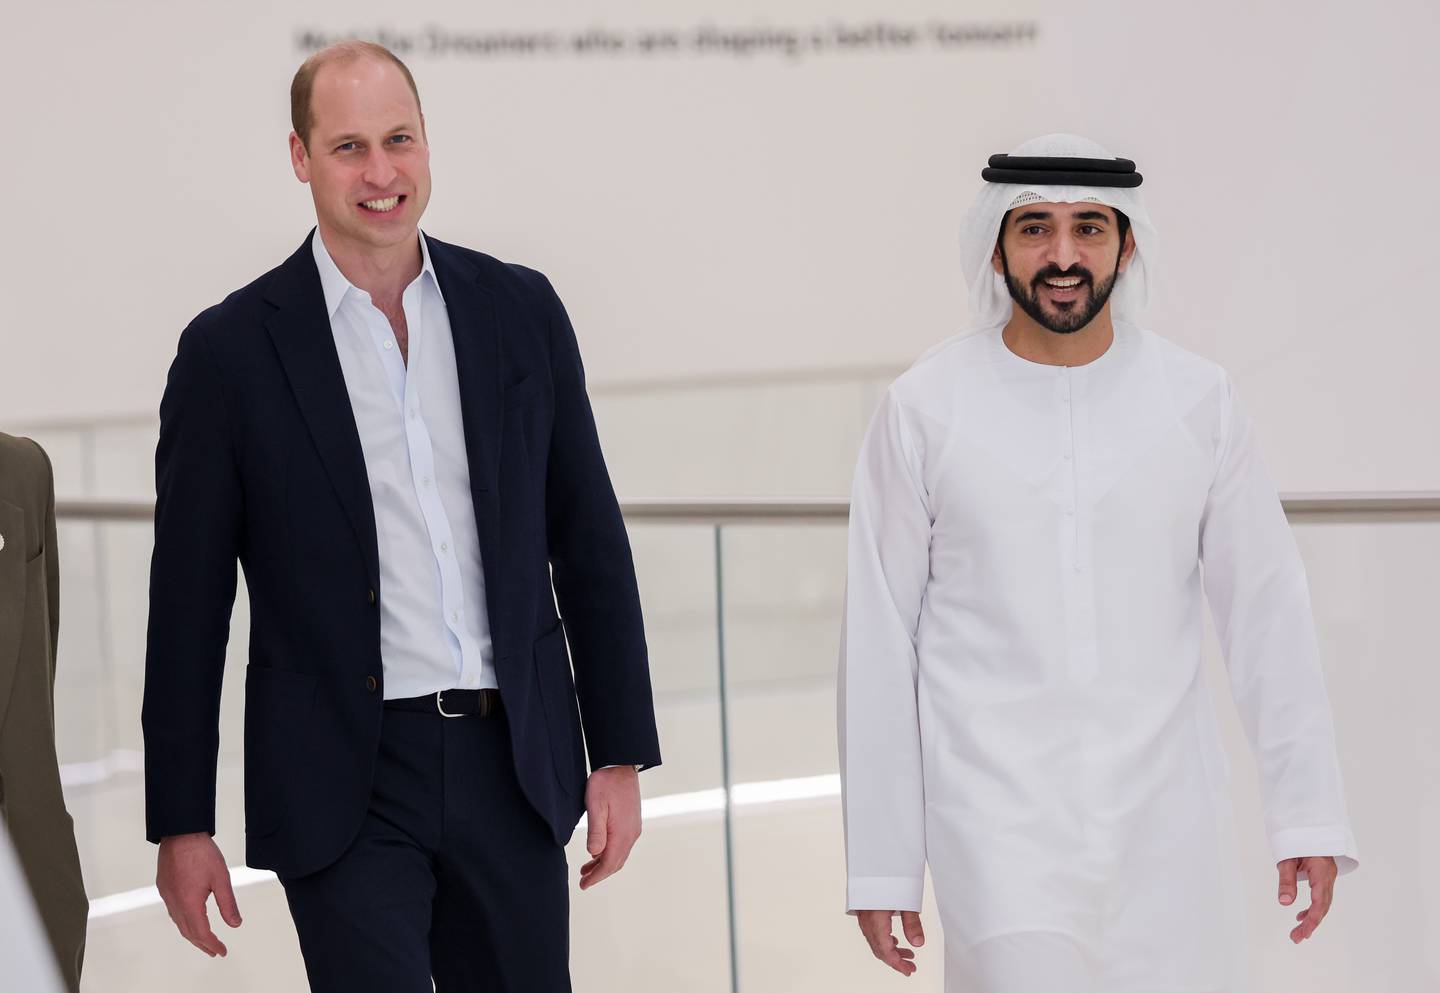 The Duke of Cambridge with Sheikh Hamdan, Crown Prince of Dubai, during his visit to the UK pavilion at Expo 2020 Dubai. Chris Jackson / PA 